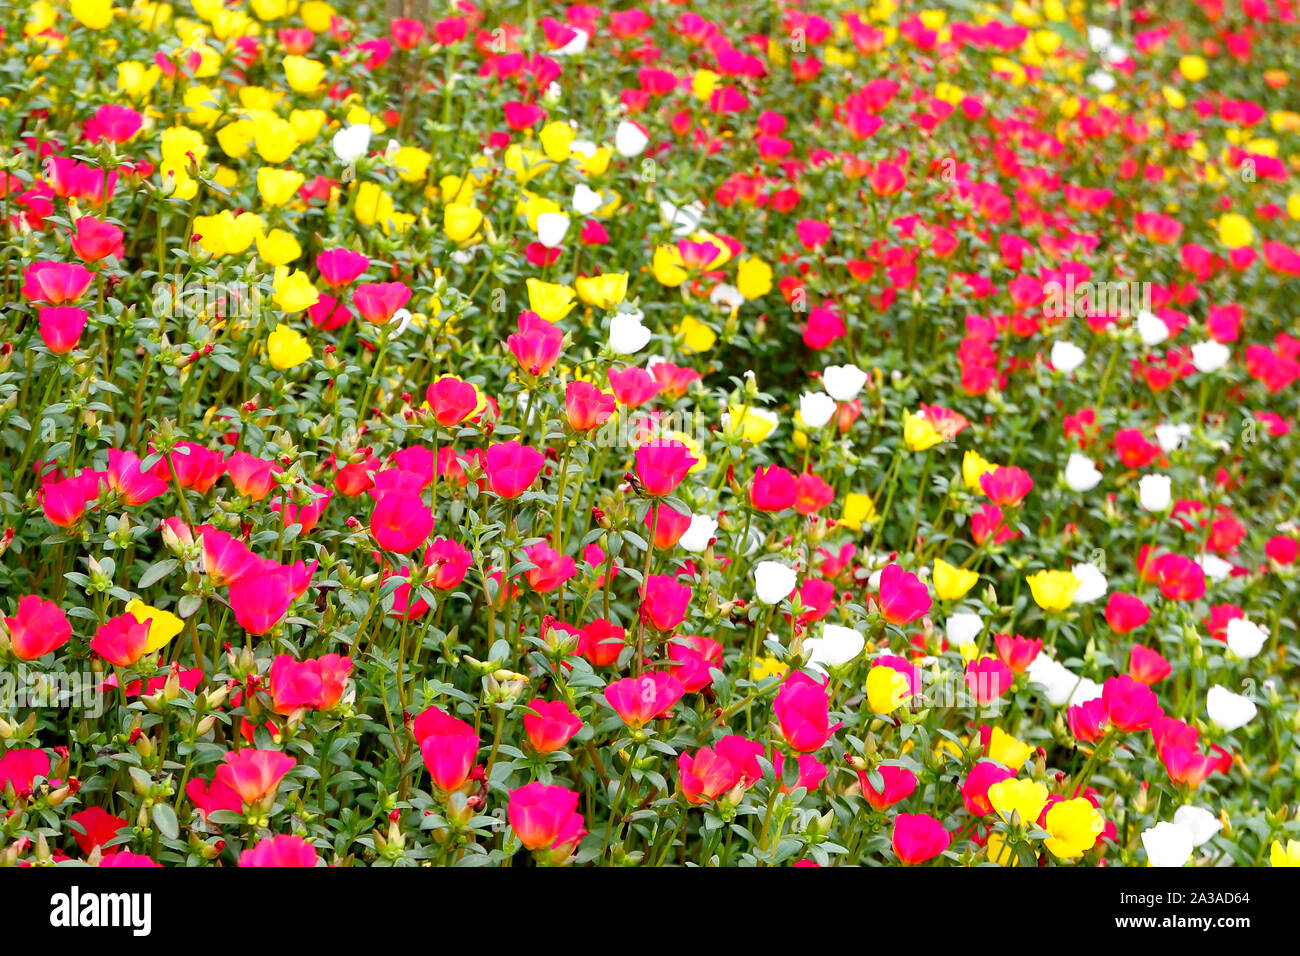 photo of colorful common purslane or verdolaga flower in the garden Stock Photo